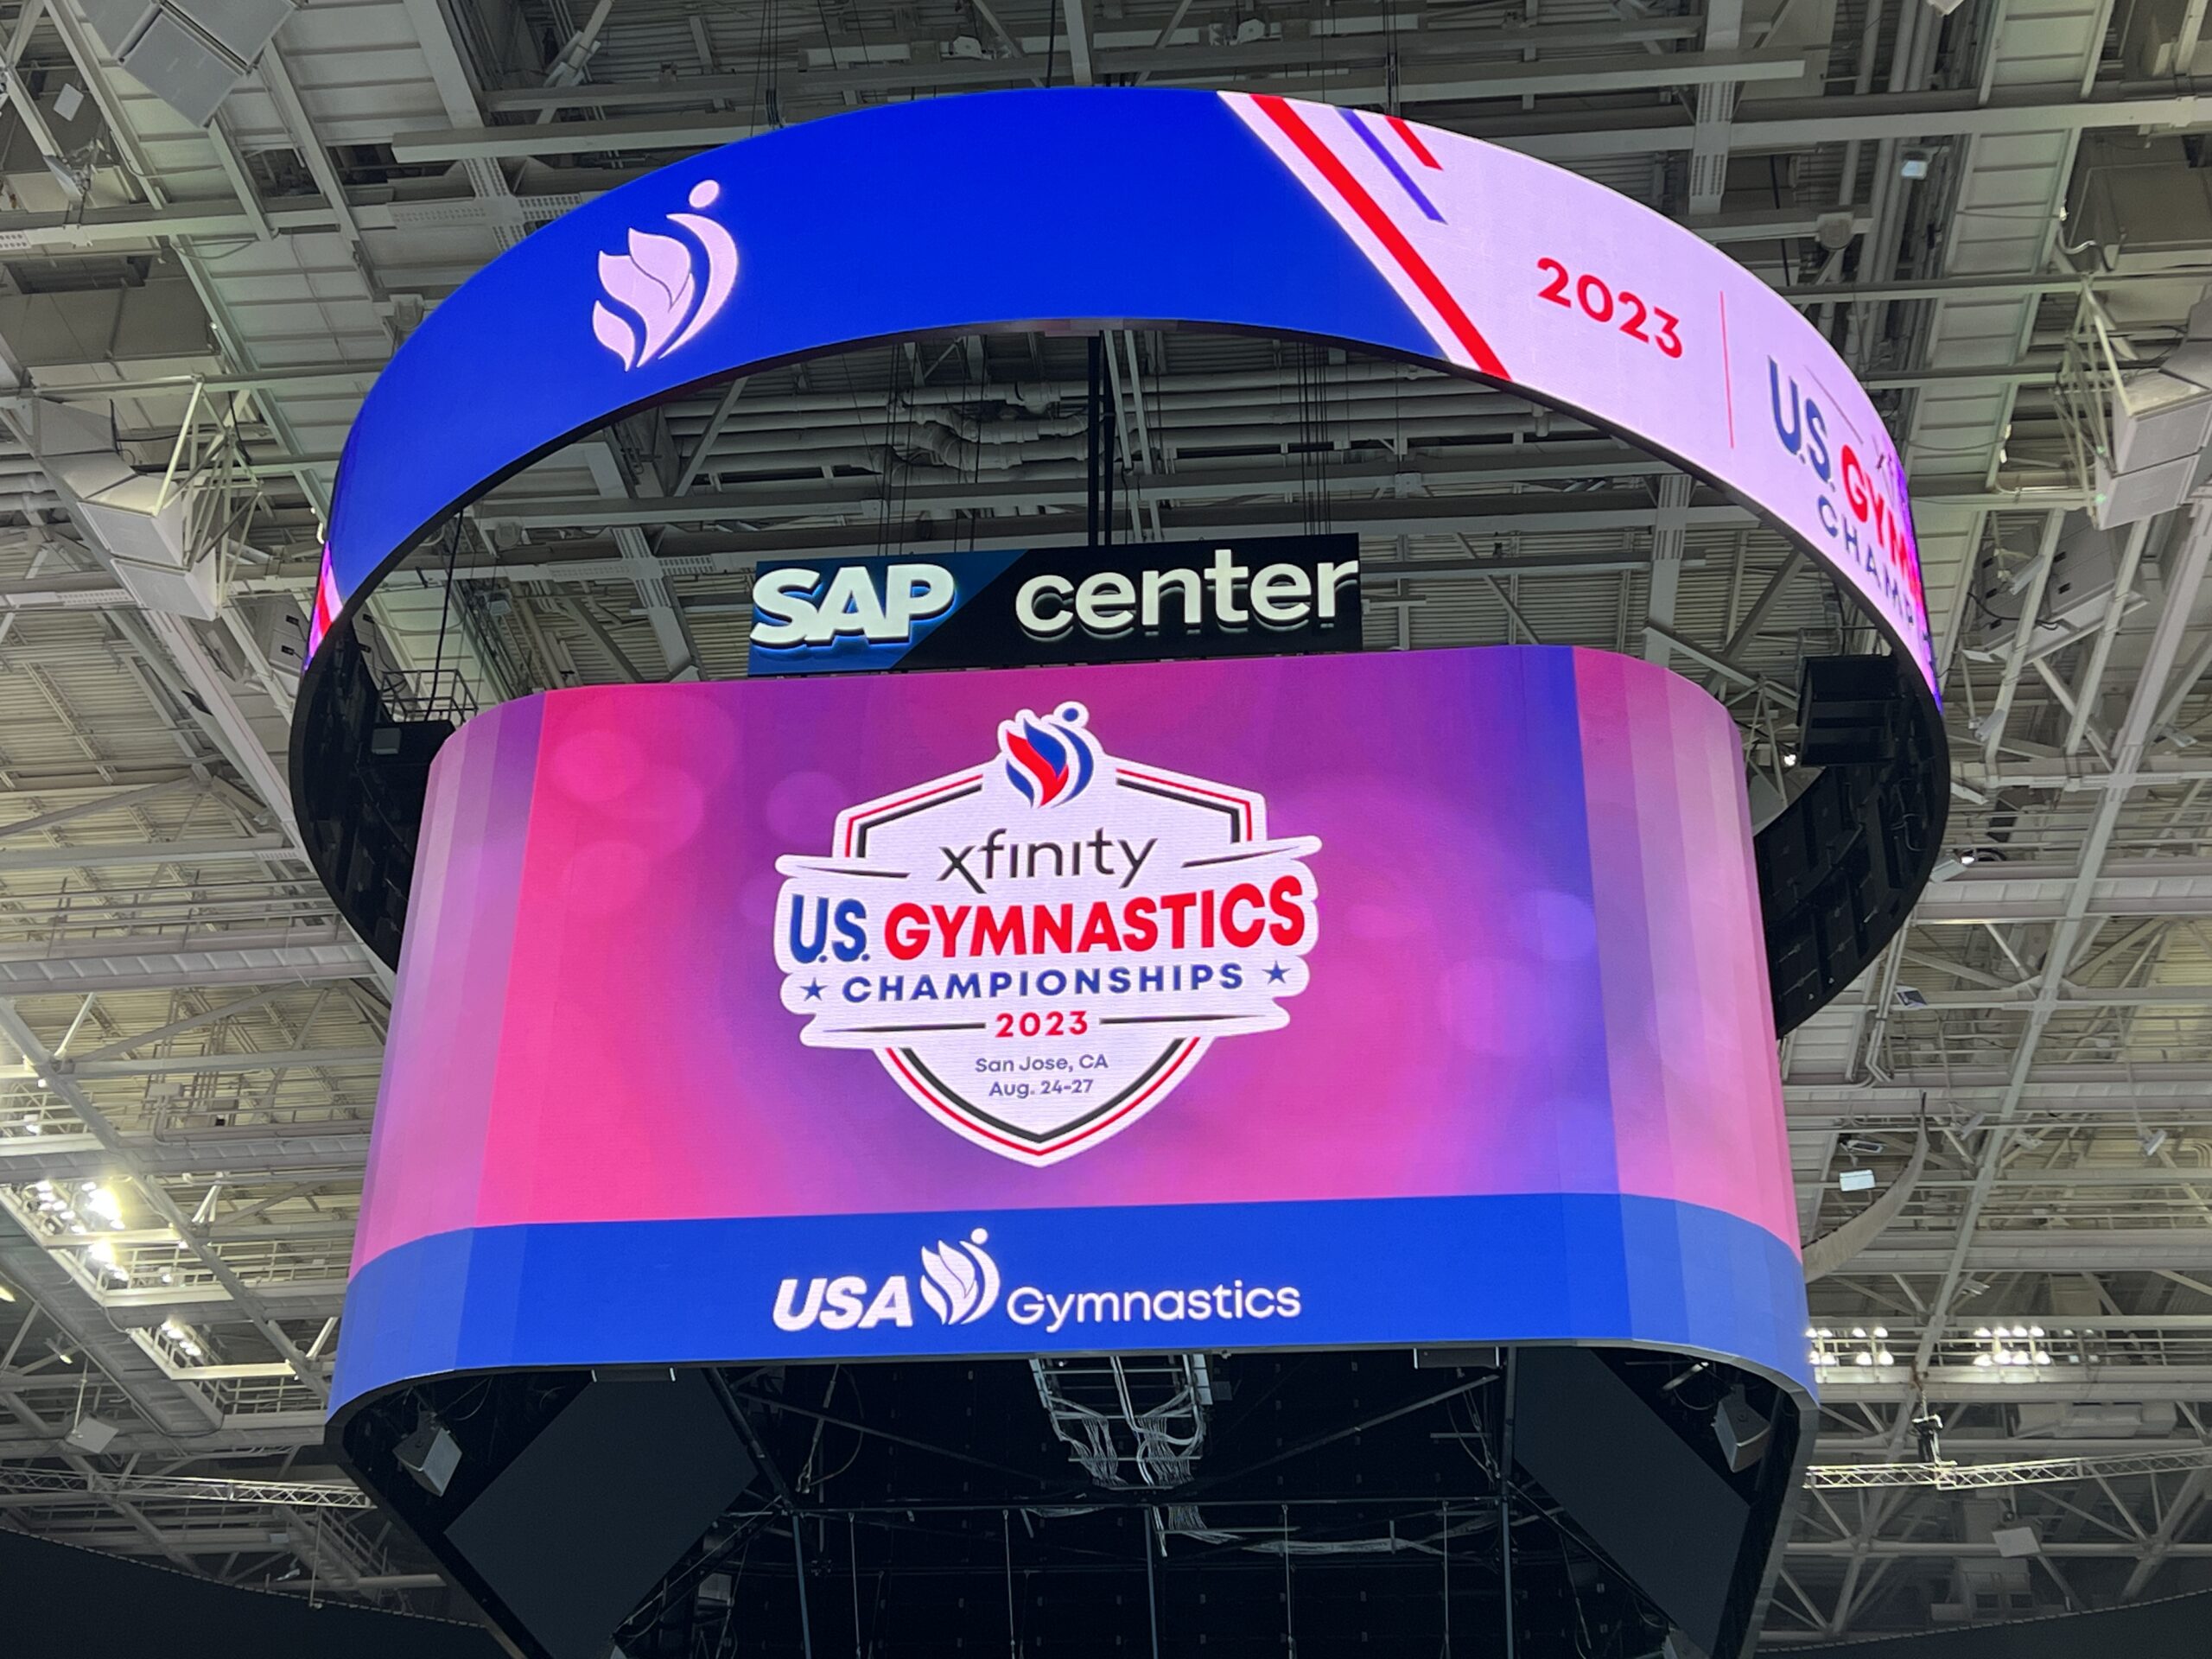 The 2023 Xfinity U.S. Gymnastics Championships logo under the SAP Center logo.